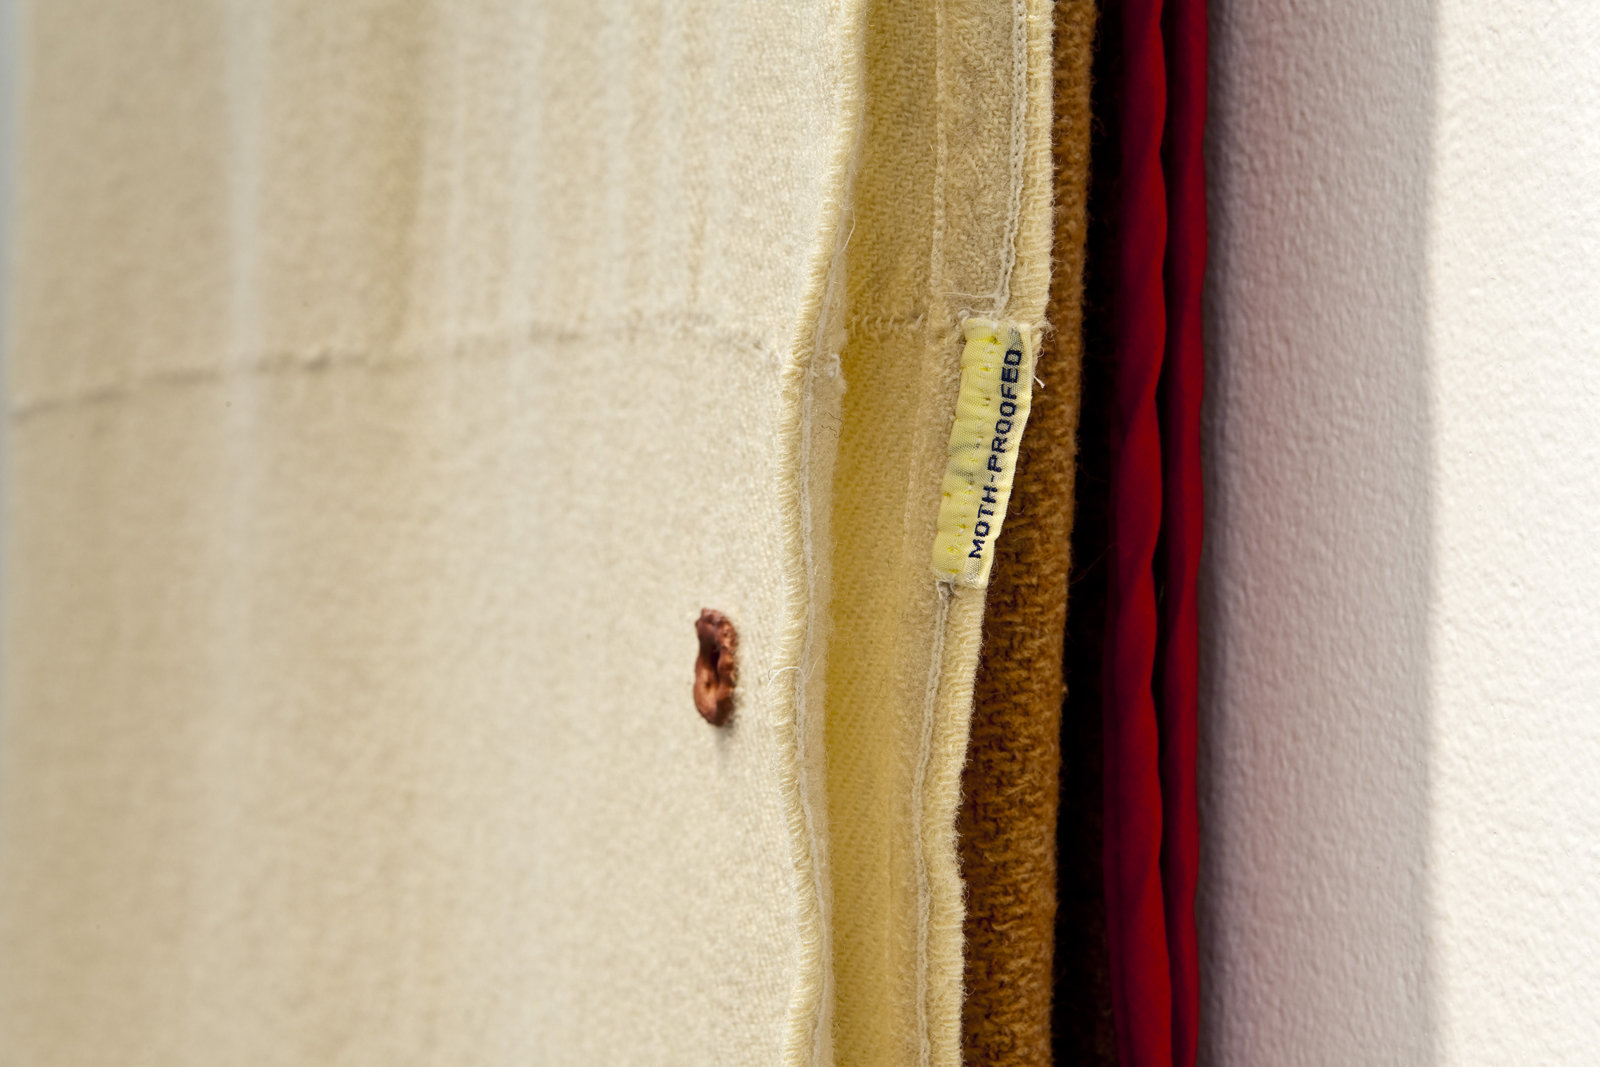 Liz Magor, Moth-proofed (detail), 2011, wool, hair, metal, plastic, polymerized gypsum, thread, 66 x 22 x 6 in. (168 x 56 x 7 cm). Photo: Toni Hafkenscheid